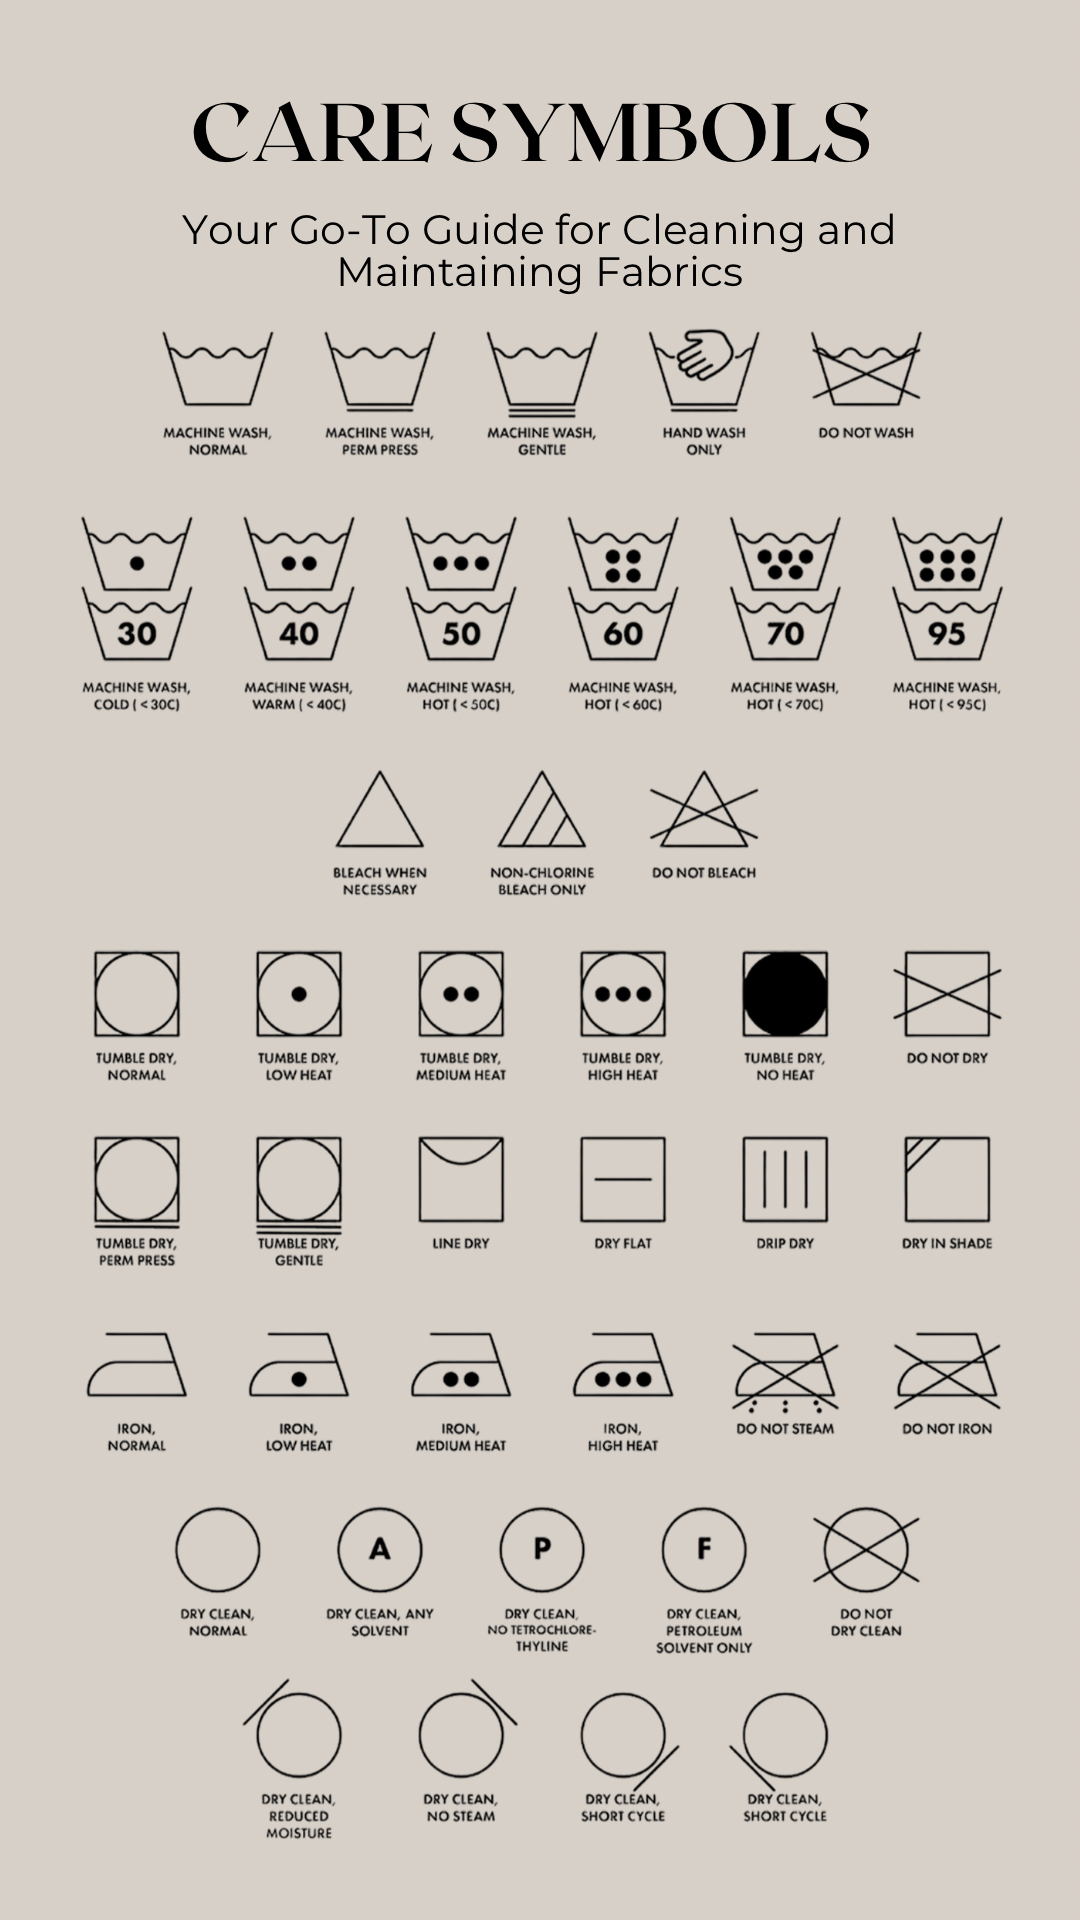 Care Symbols